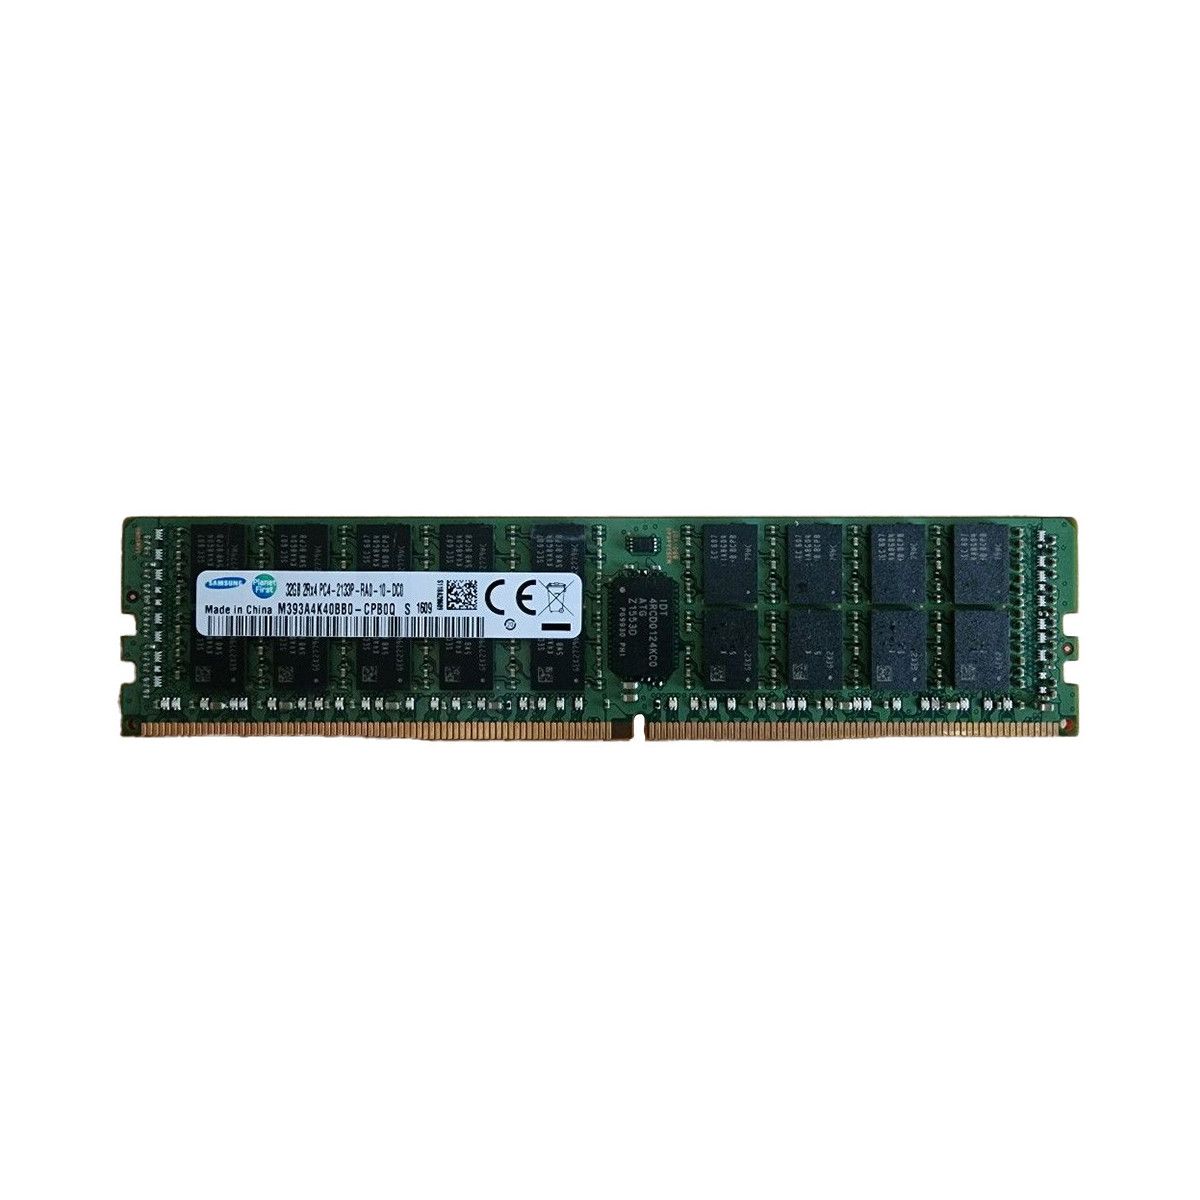 753222-B21-MS - Memstar 1x 32GB DDR4-2133 RDIMM PC4-17000P-R - Mem-Star Compatible OEM Memory 1 - Memstar 